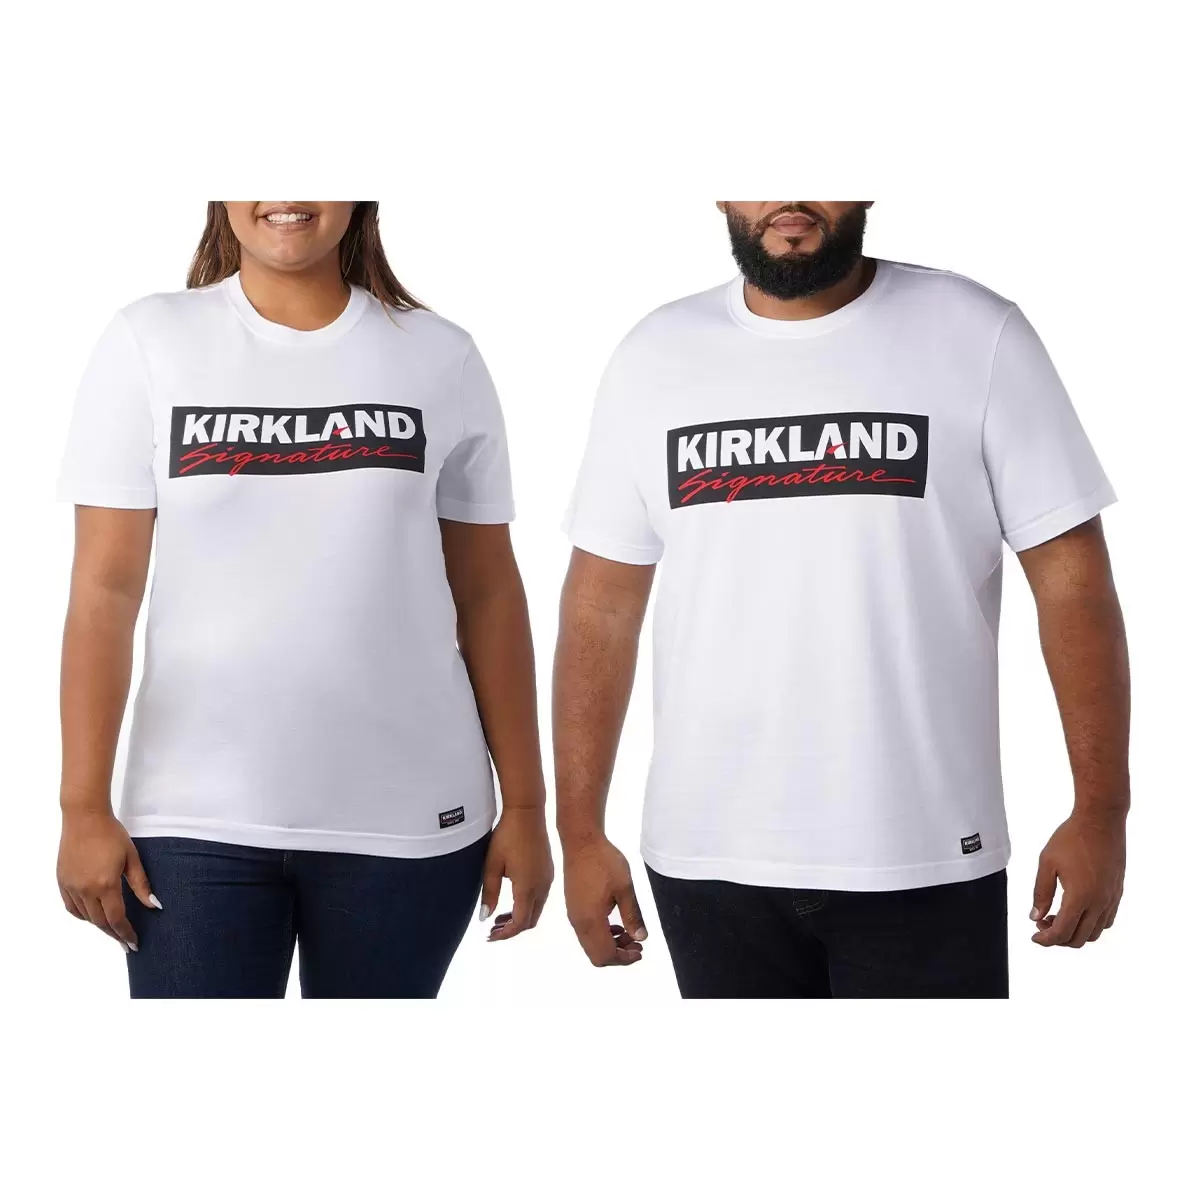 Kirkland Signature 科克蘭 Logo 短袖上衣 白 XXXL